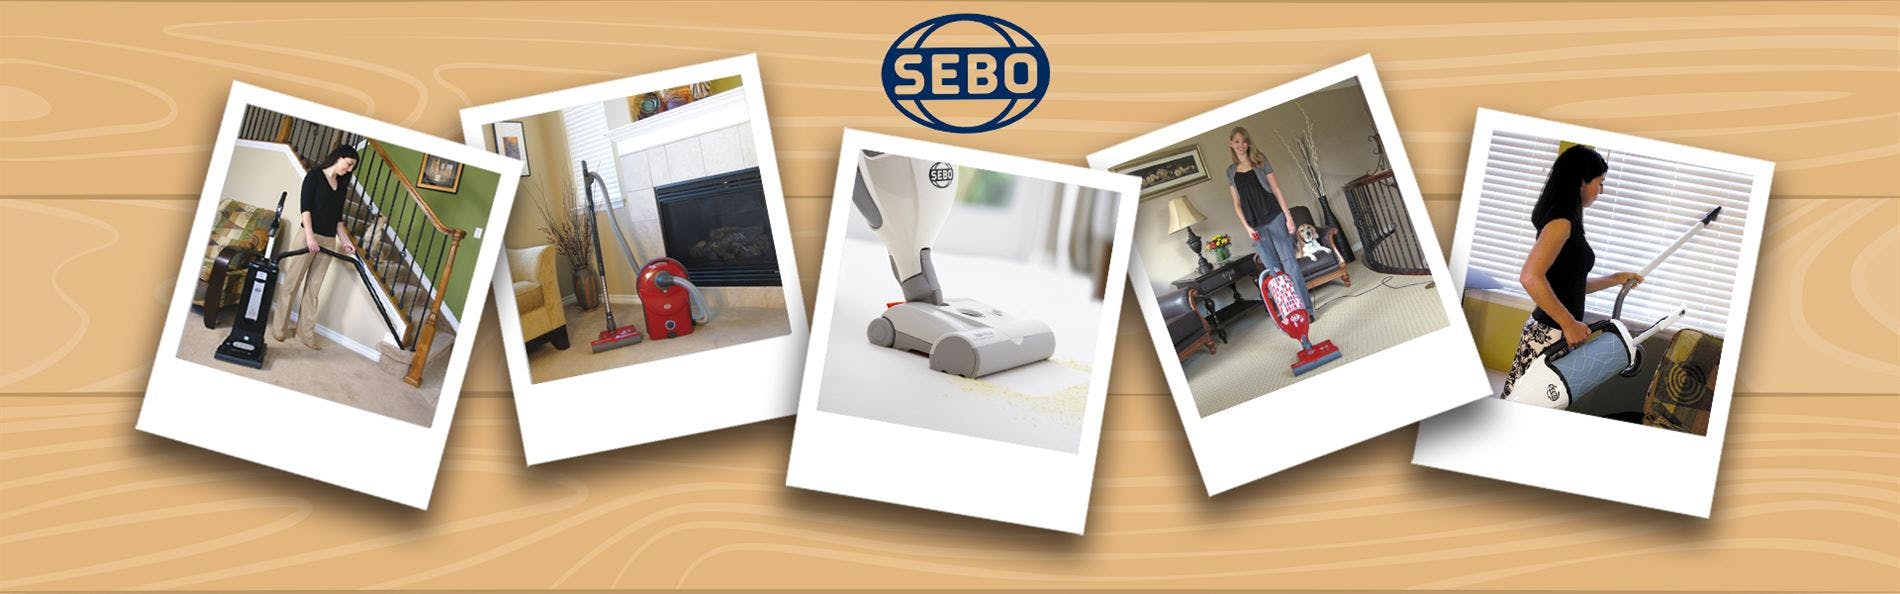 SEBO vacuum brand header